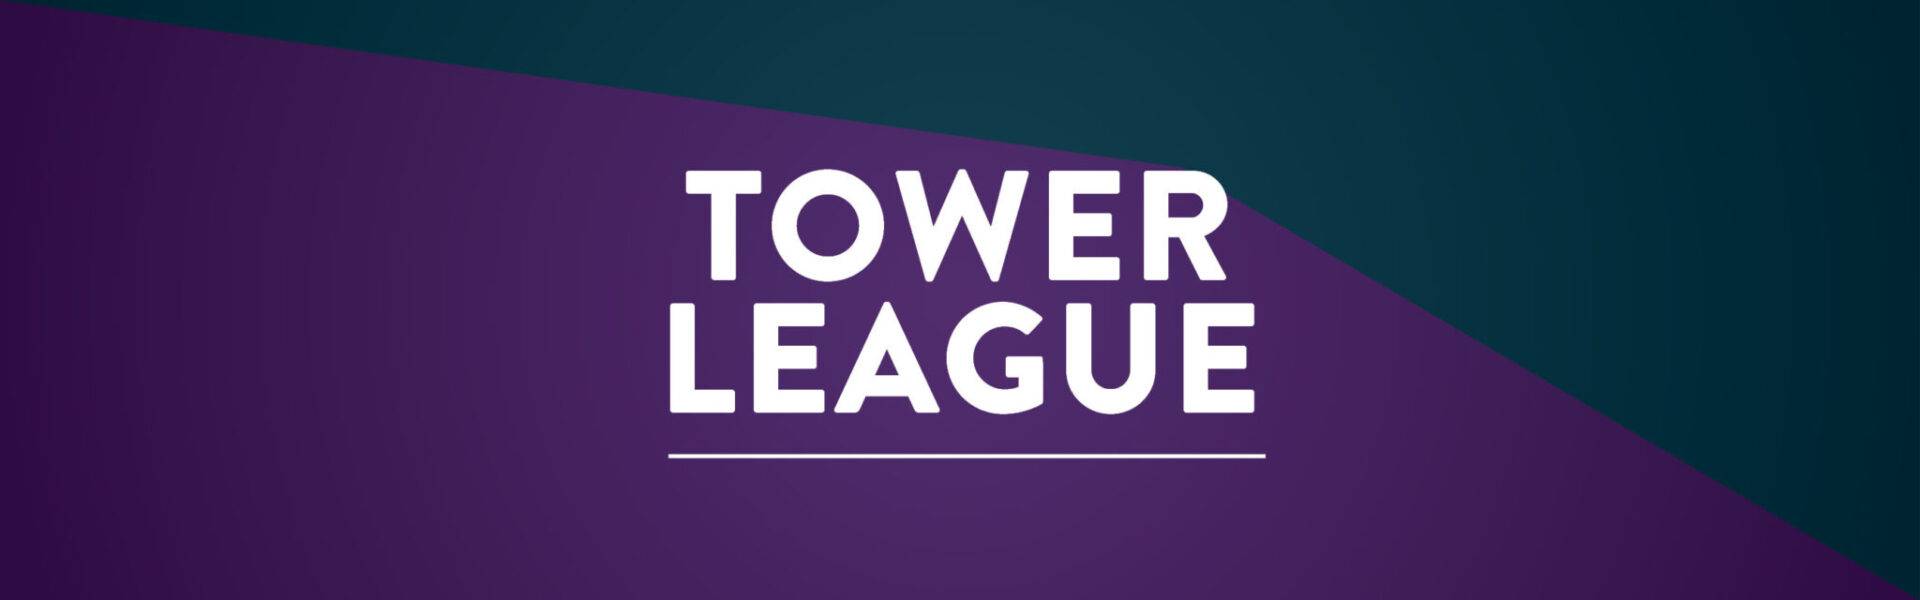 Tower League1